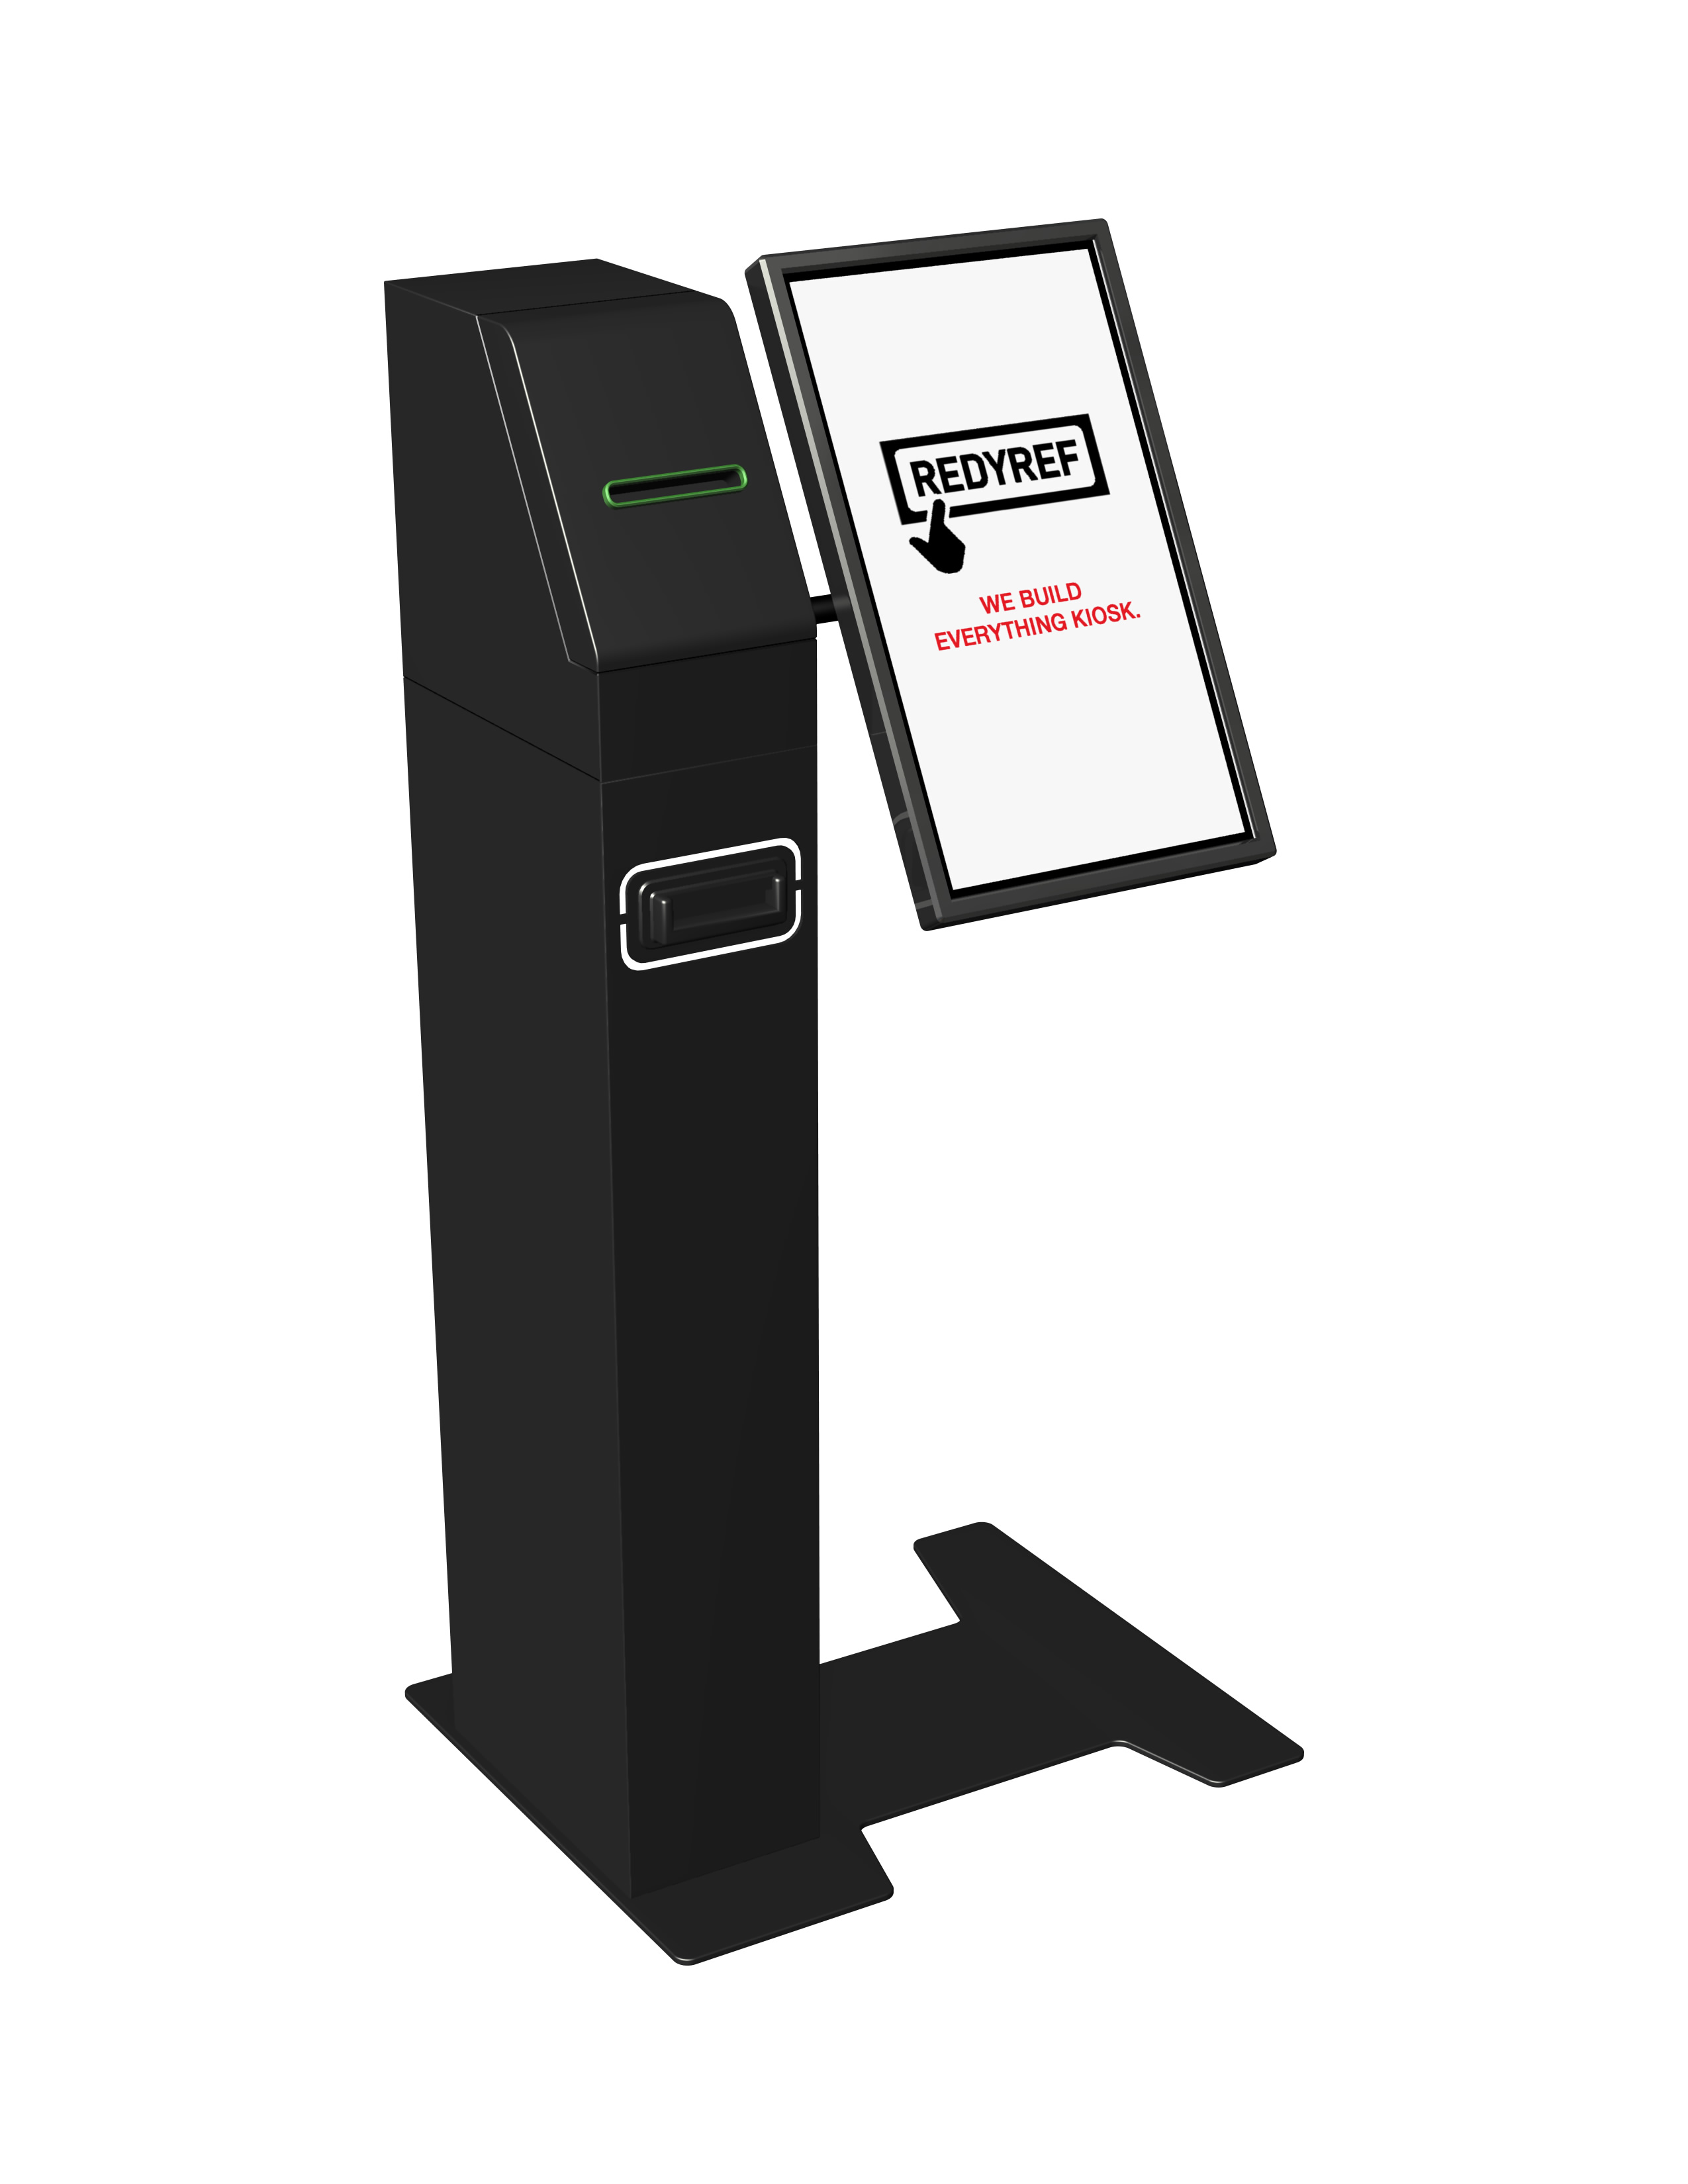 digital bill payment kiosk